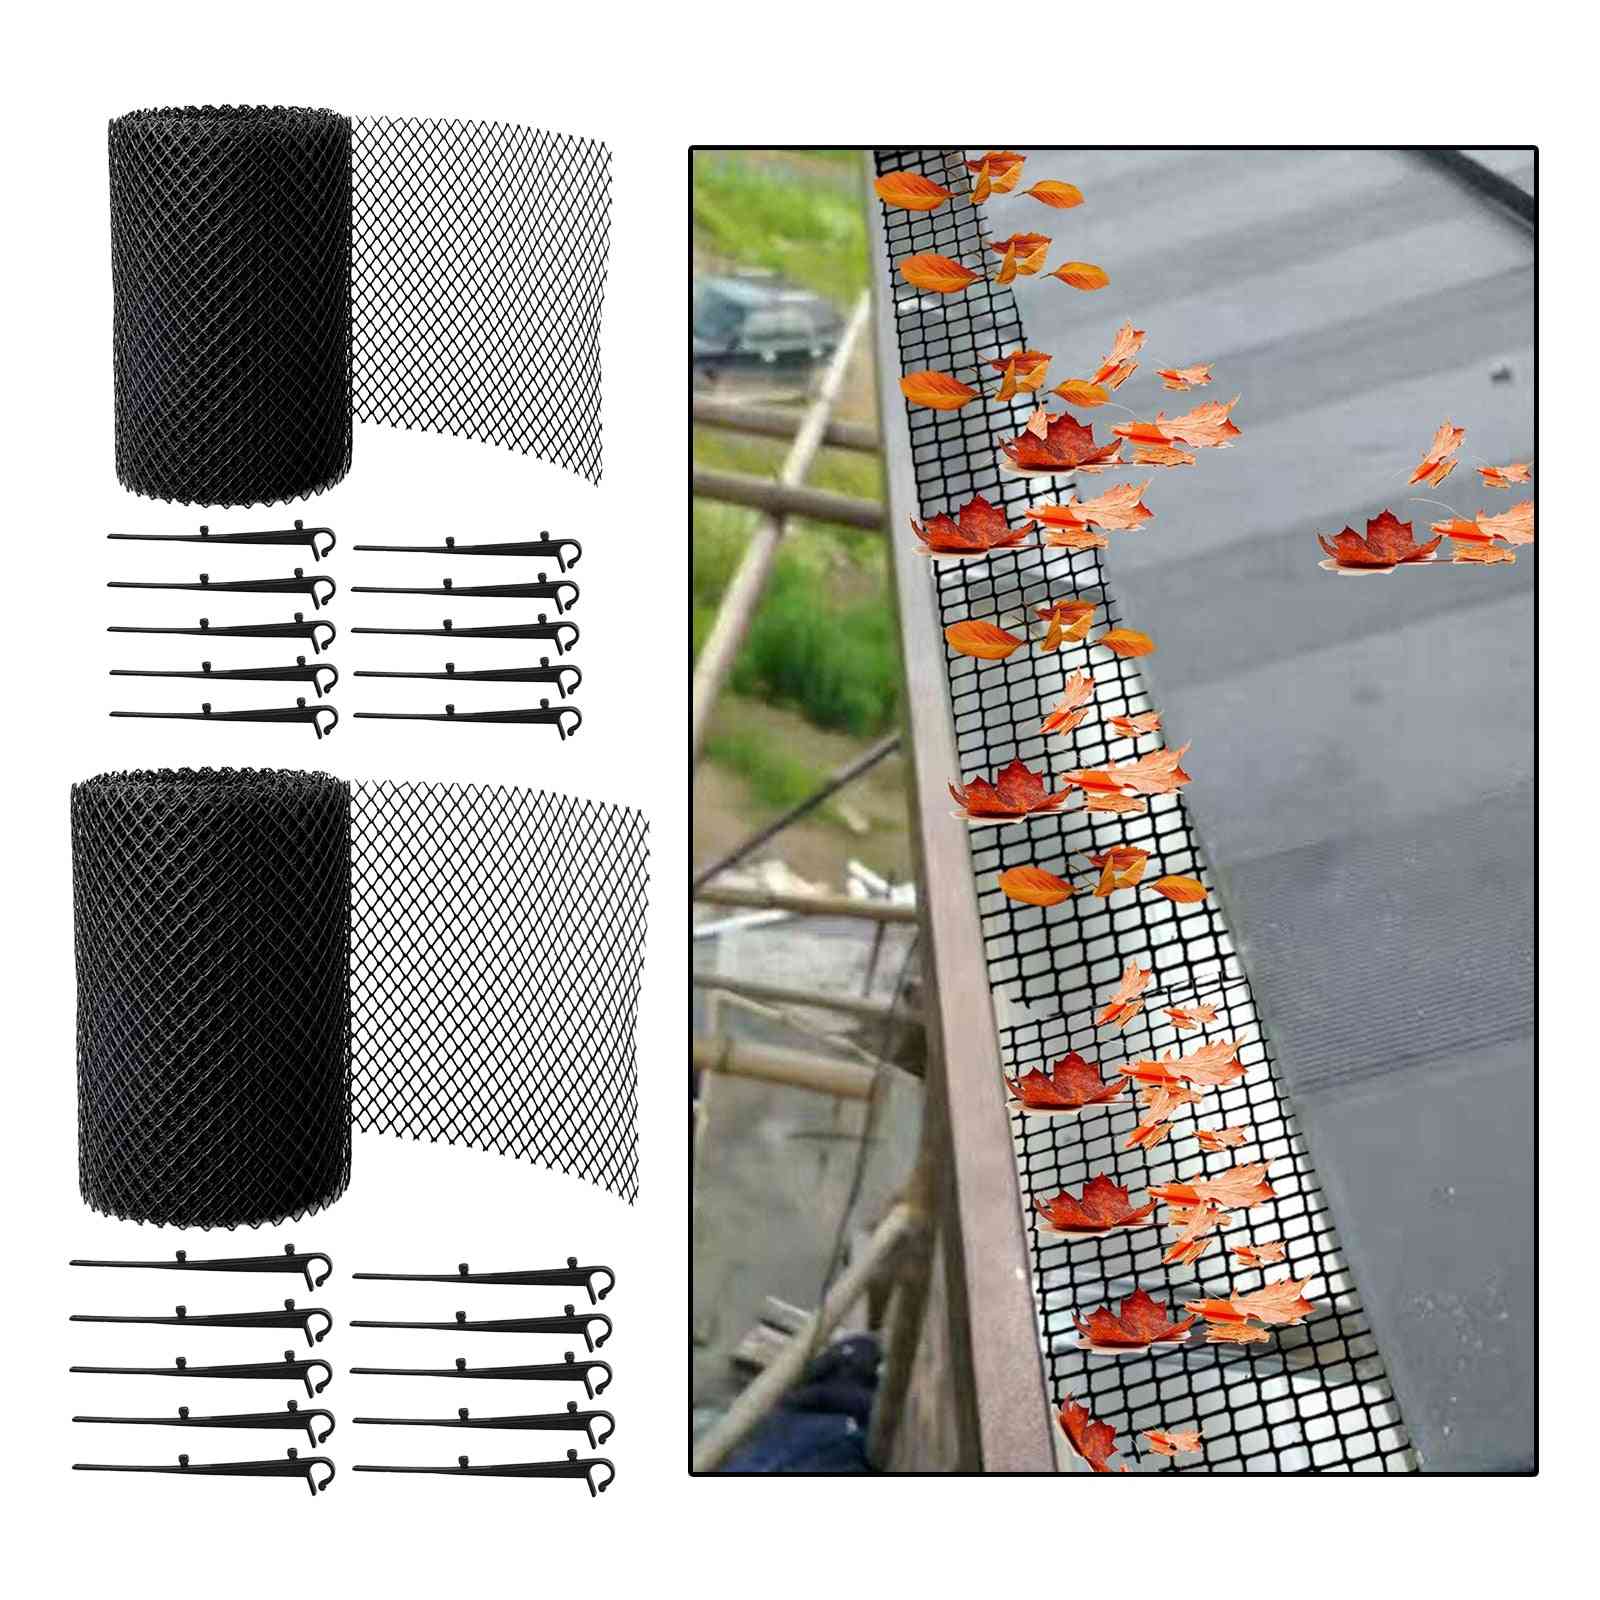 Plastic Roof Guttering Cover- Debris Protector Stop Leaf Blocks With Hooks